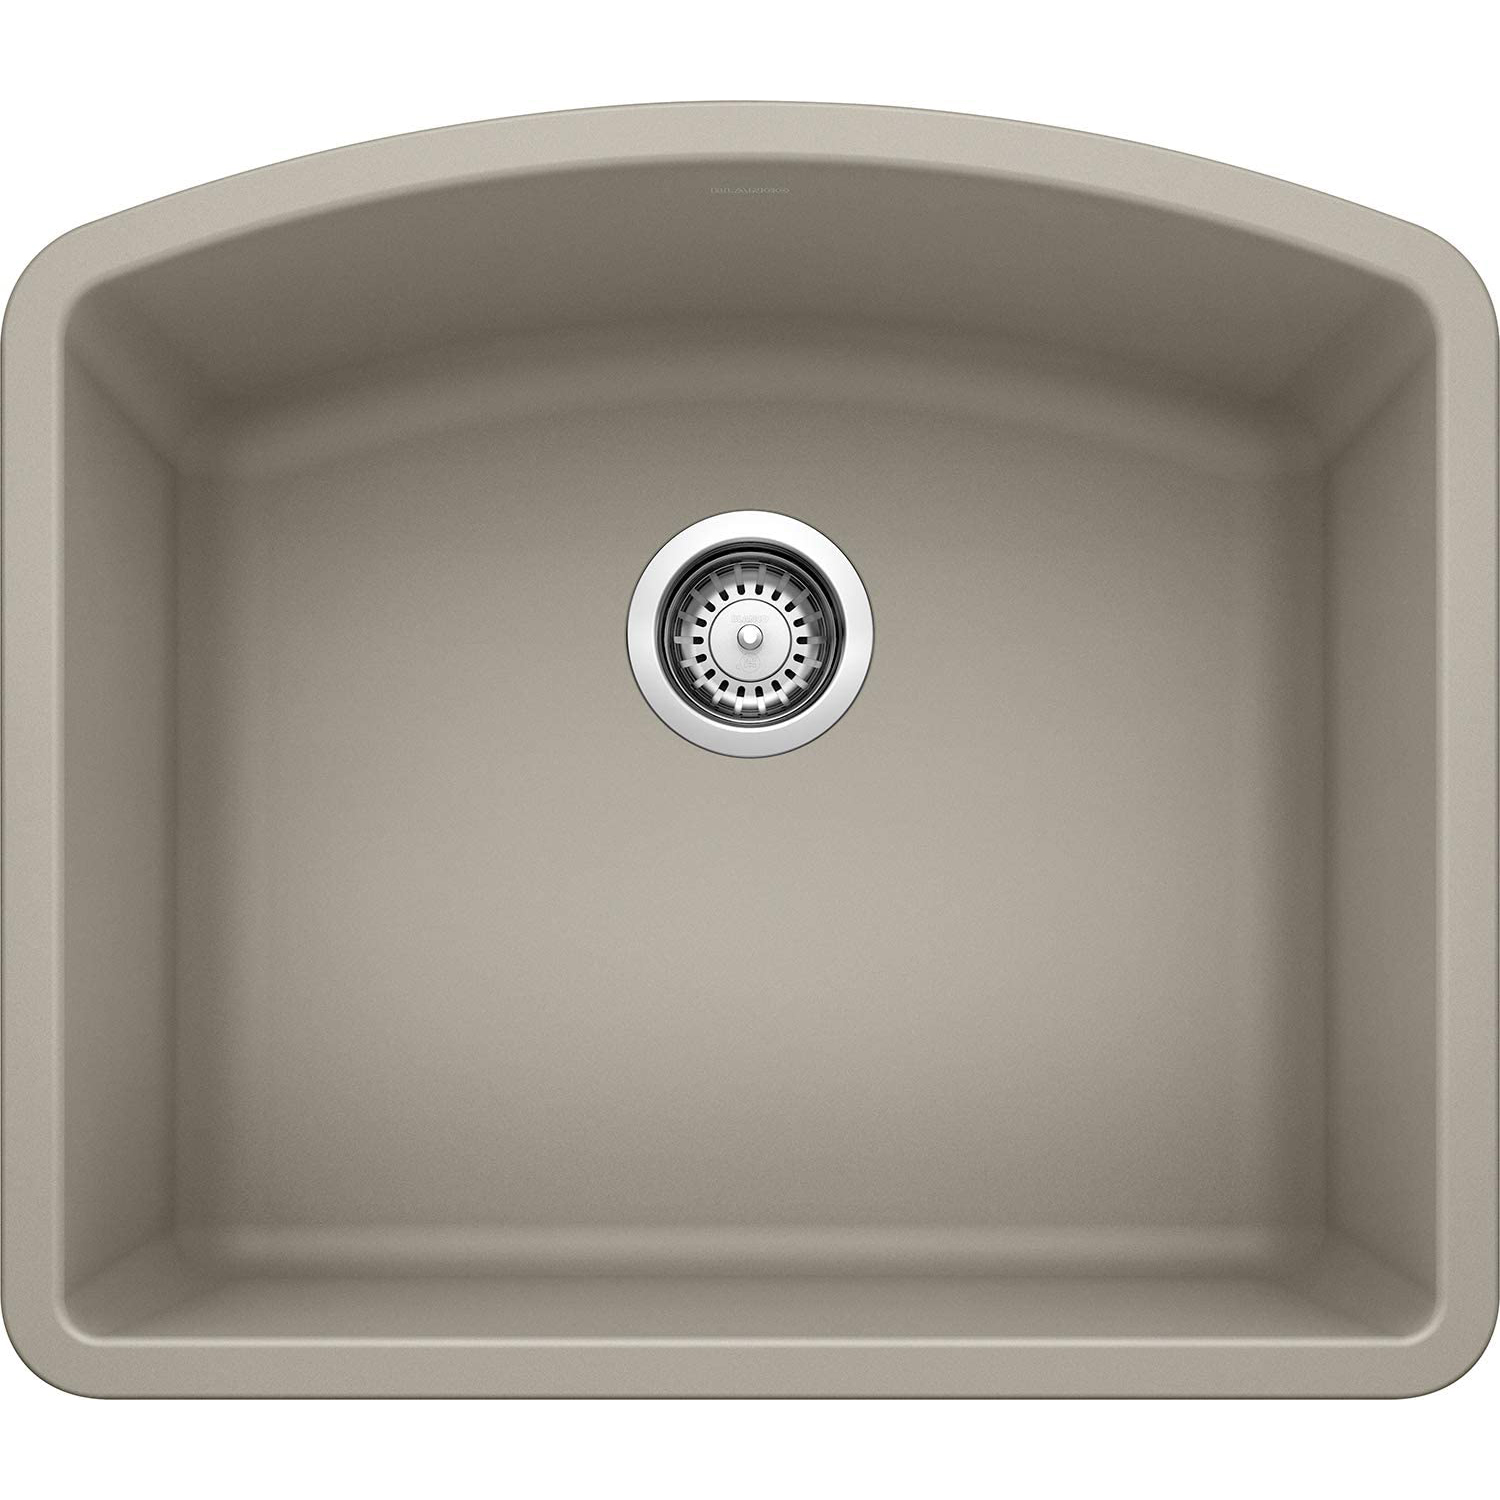 Diamond 24x20-13/16x10" Single Bowl Undermount Sink, Truffle